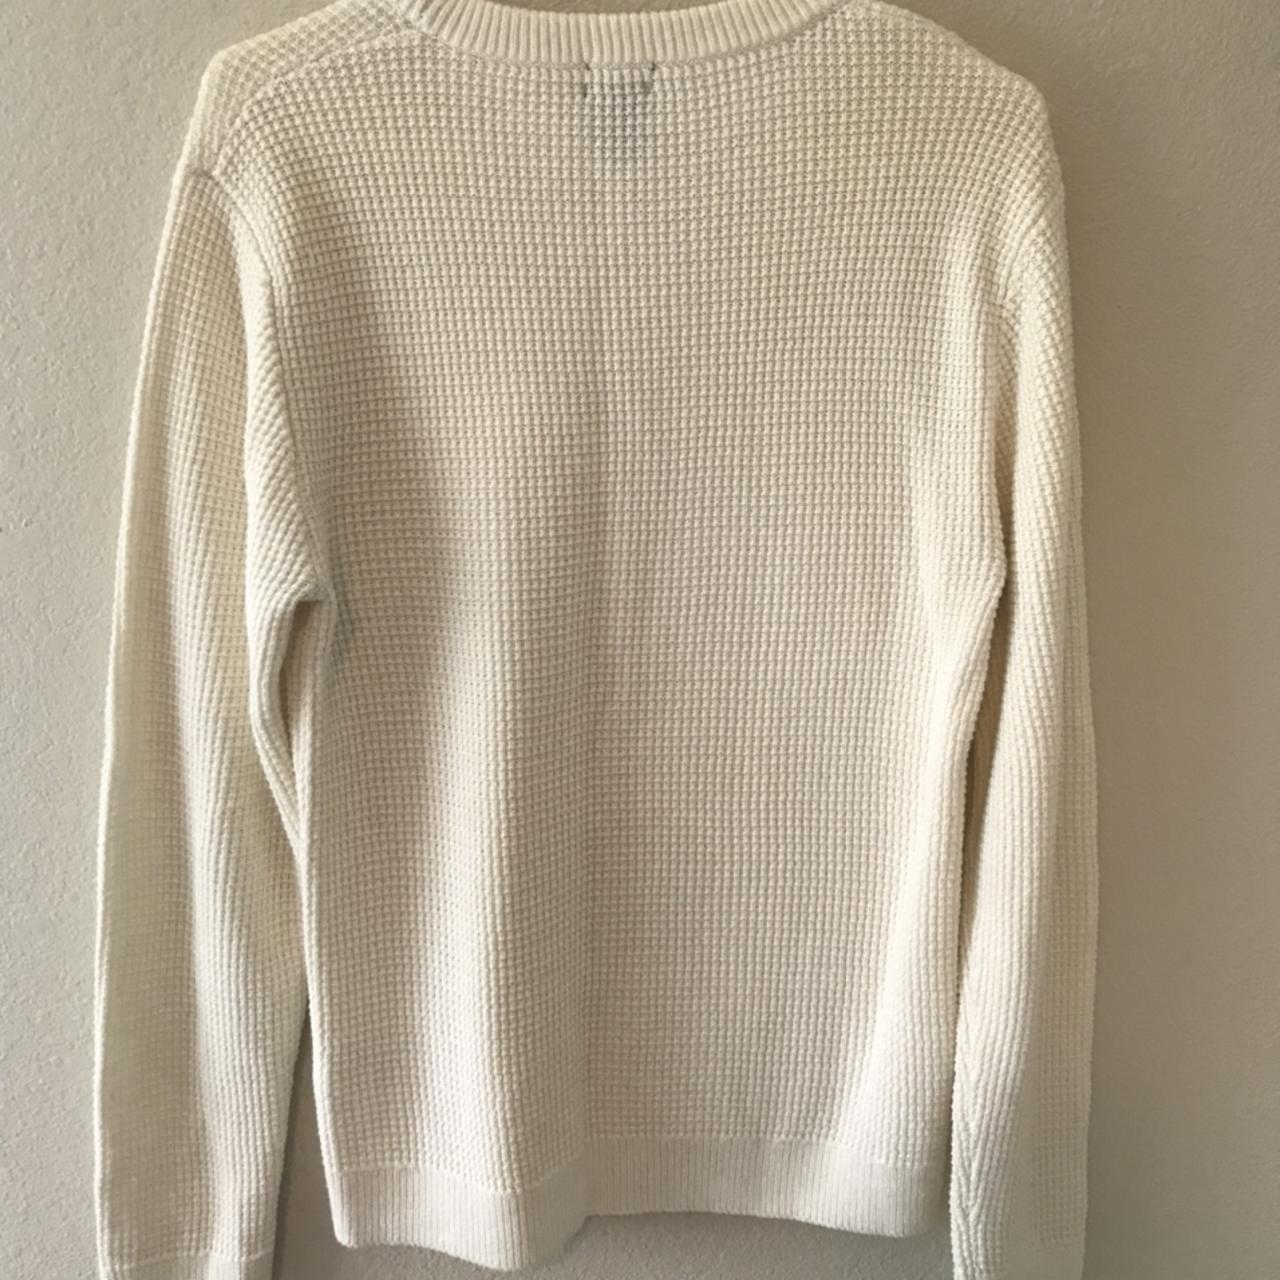 Men’s medium cream sweater. This sweater has a nice... - Depop